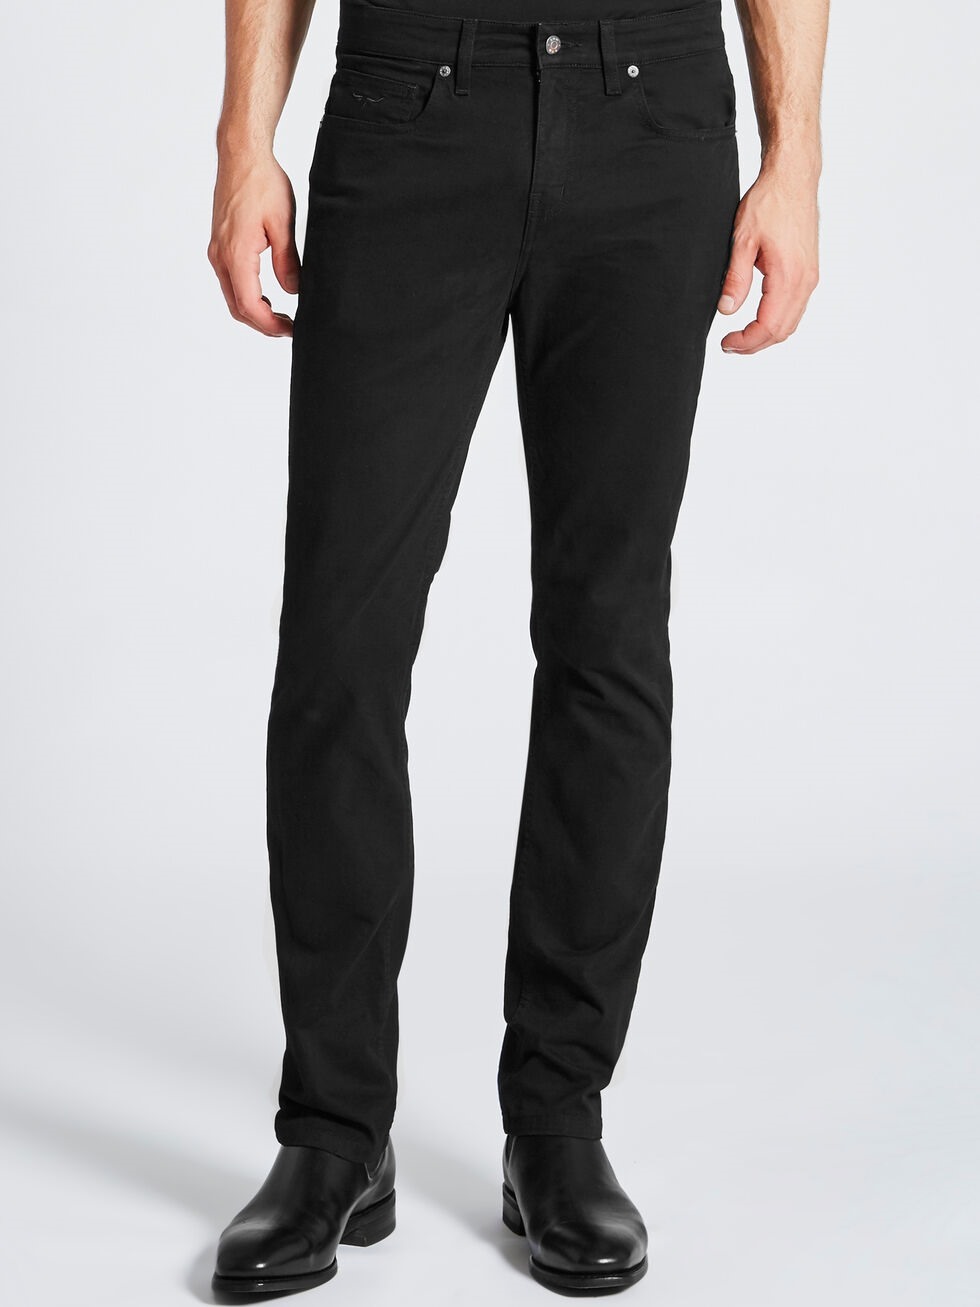 RM Williams Ramco Jeans Black | Port Phillip Shop